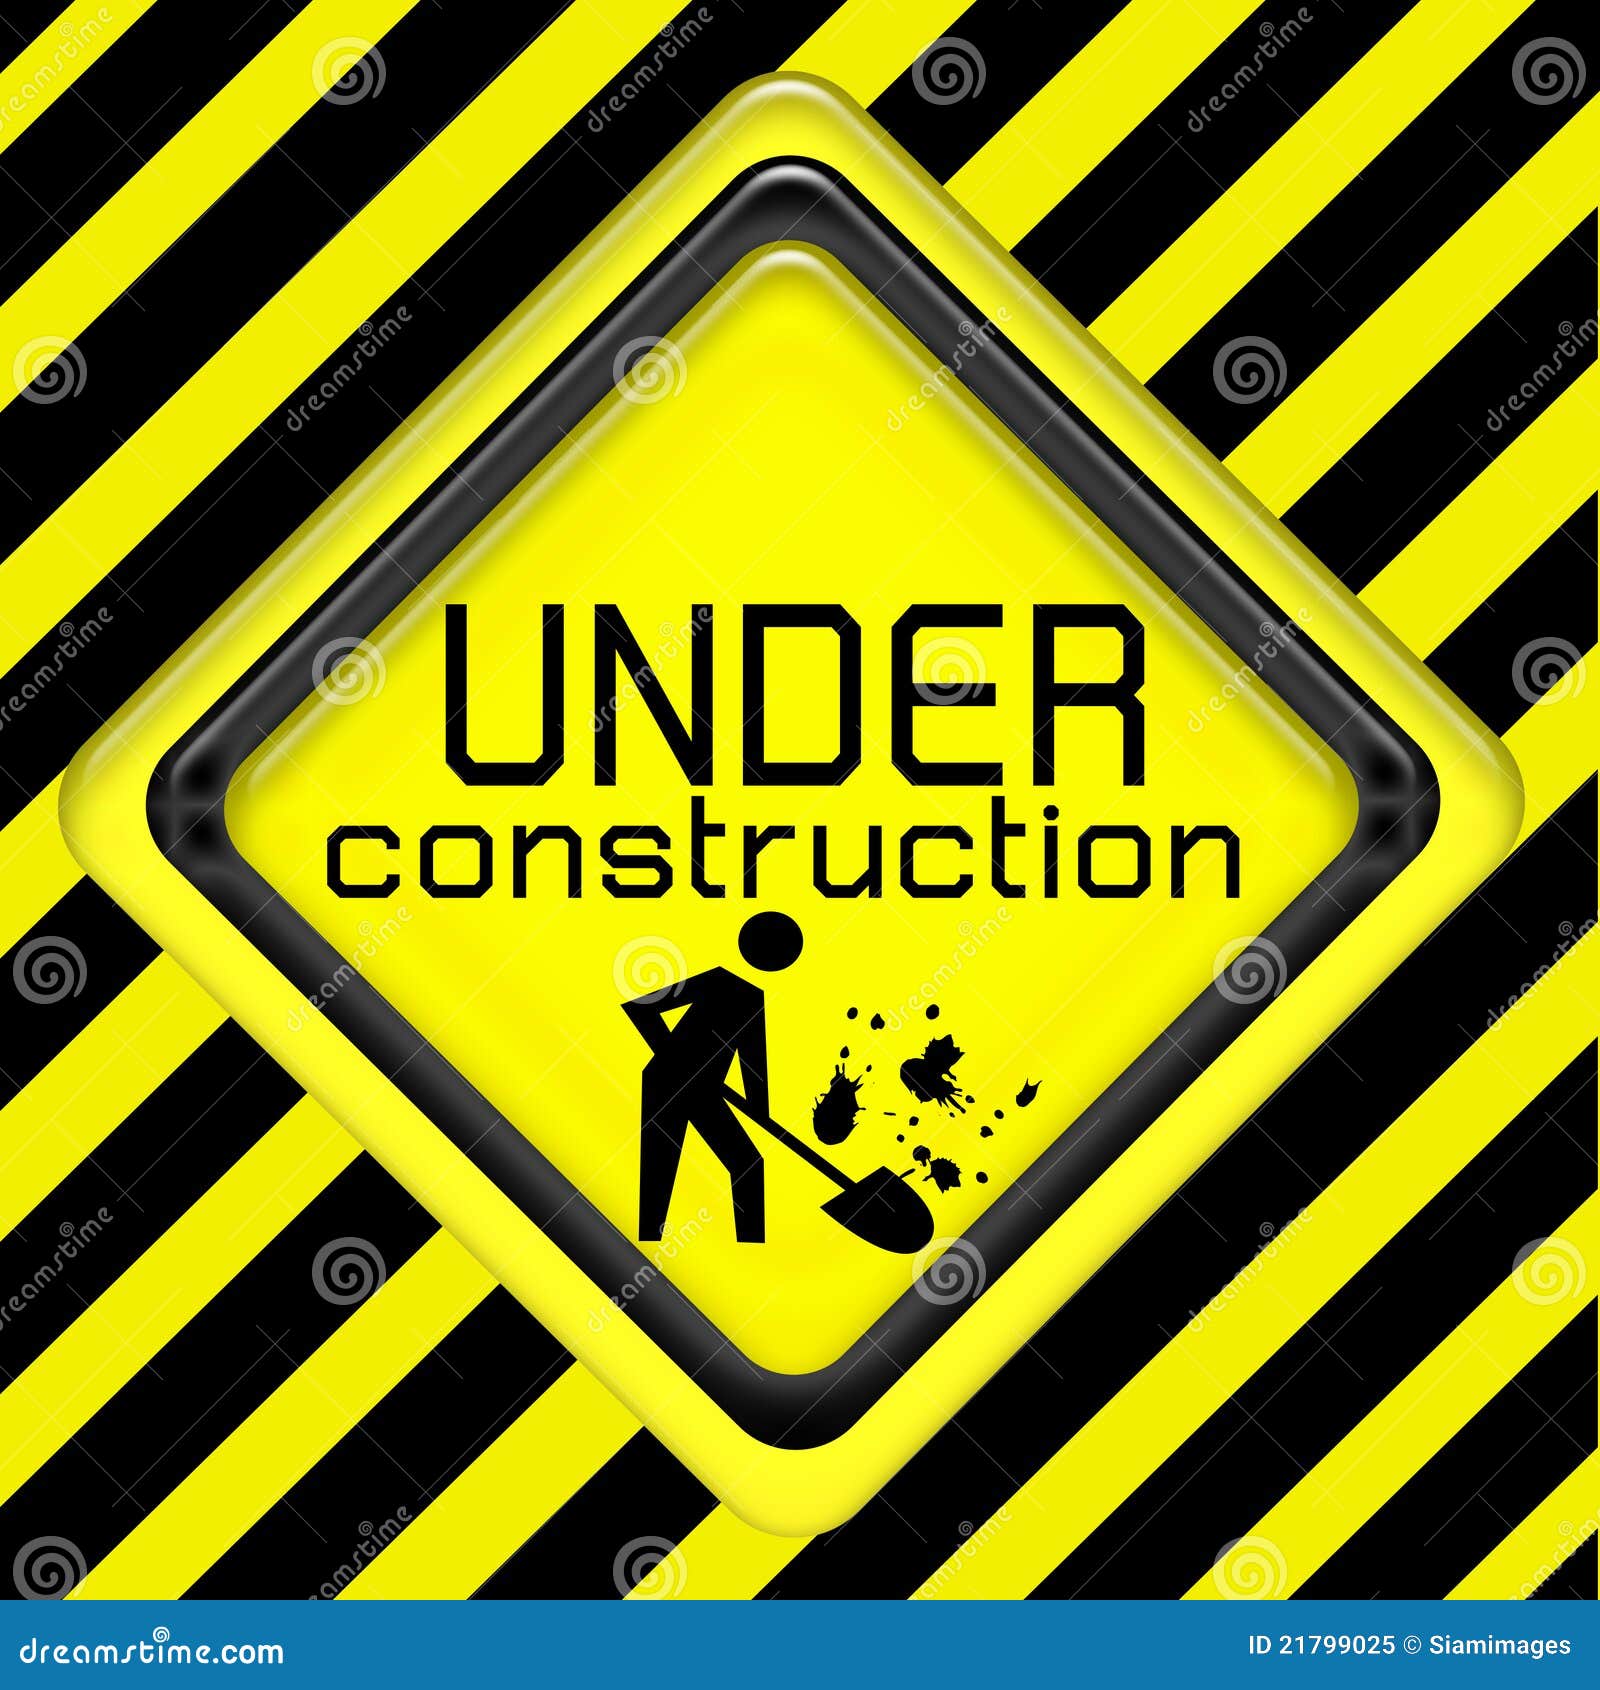 Under construction sign stock illustration. Illustration of street ...